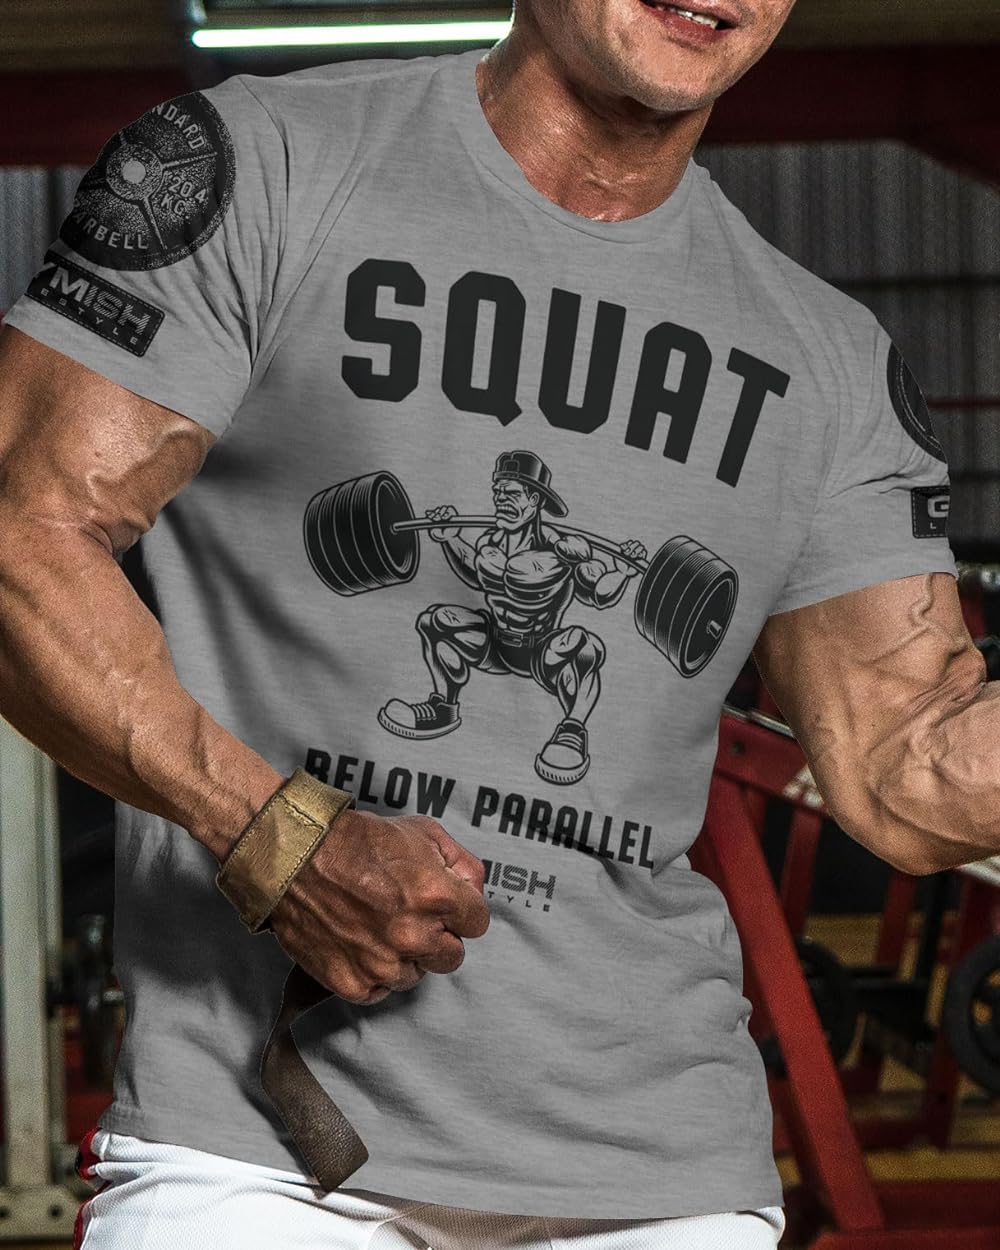 017. Squat Below Parallel Workout T-Shirt